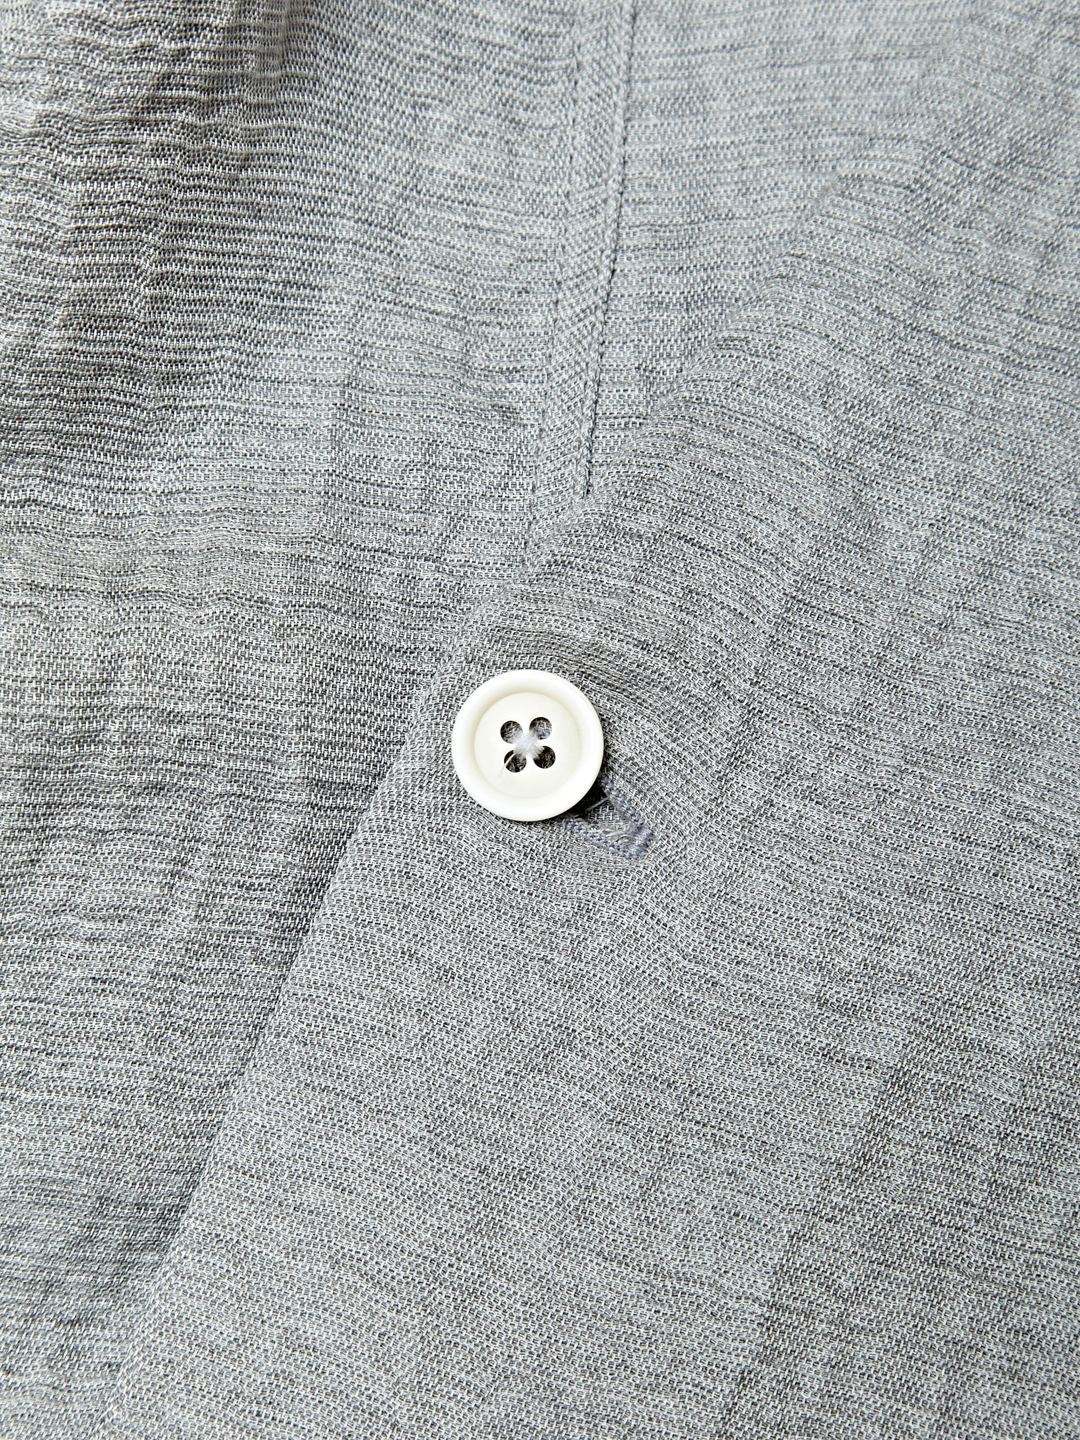 Lyst - Damir doma Mens Kimono Sleeve Coat in Gray for Men